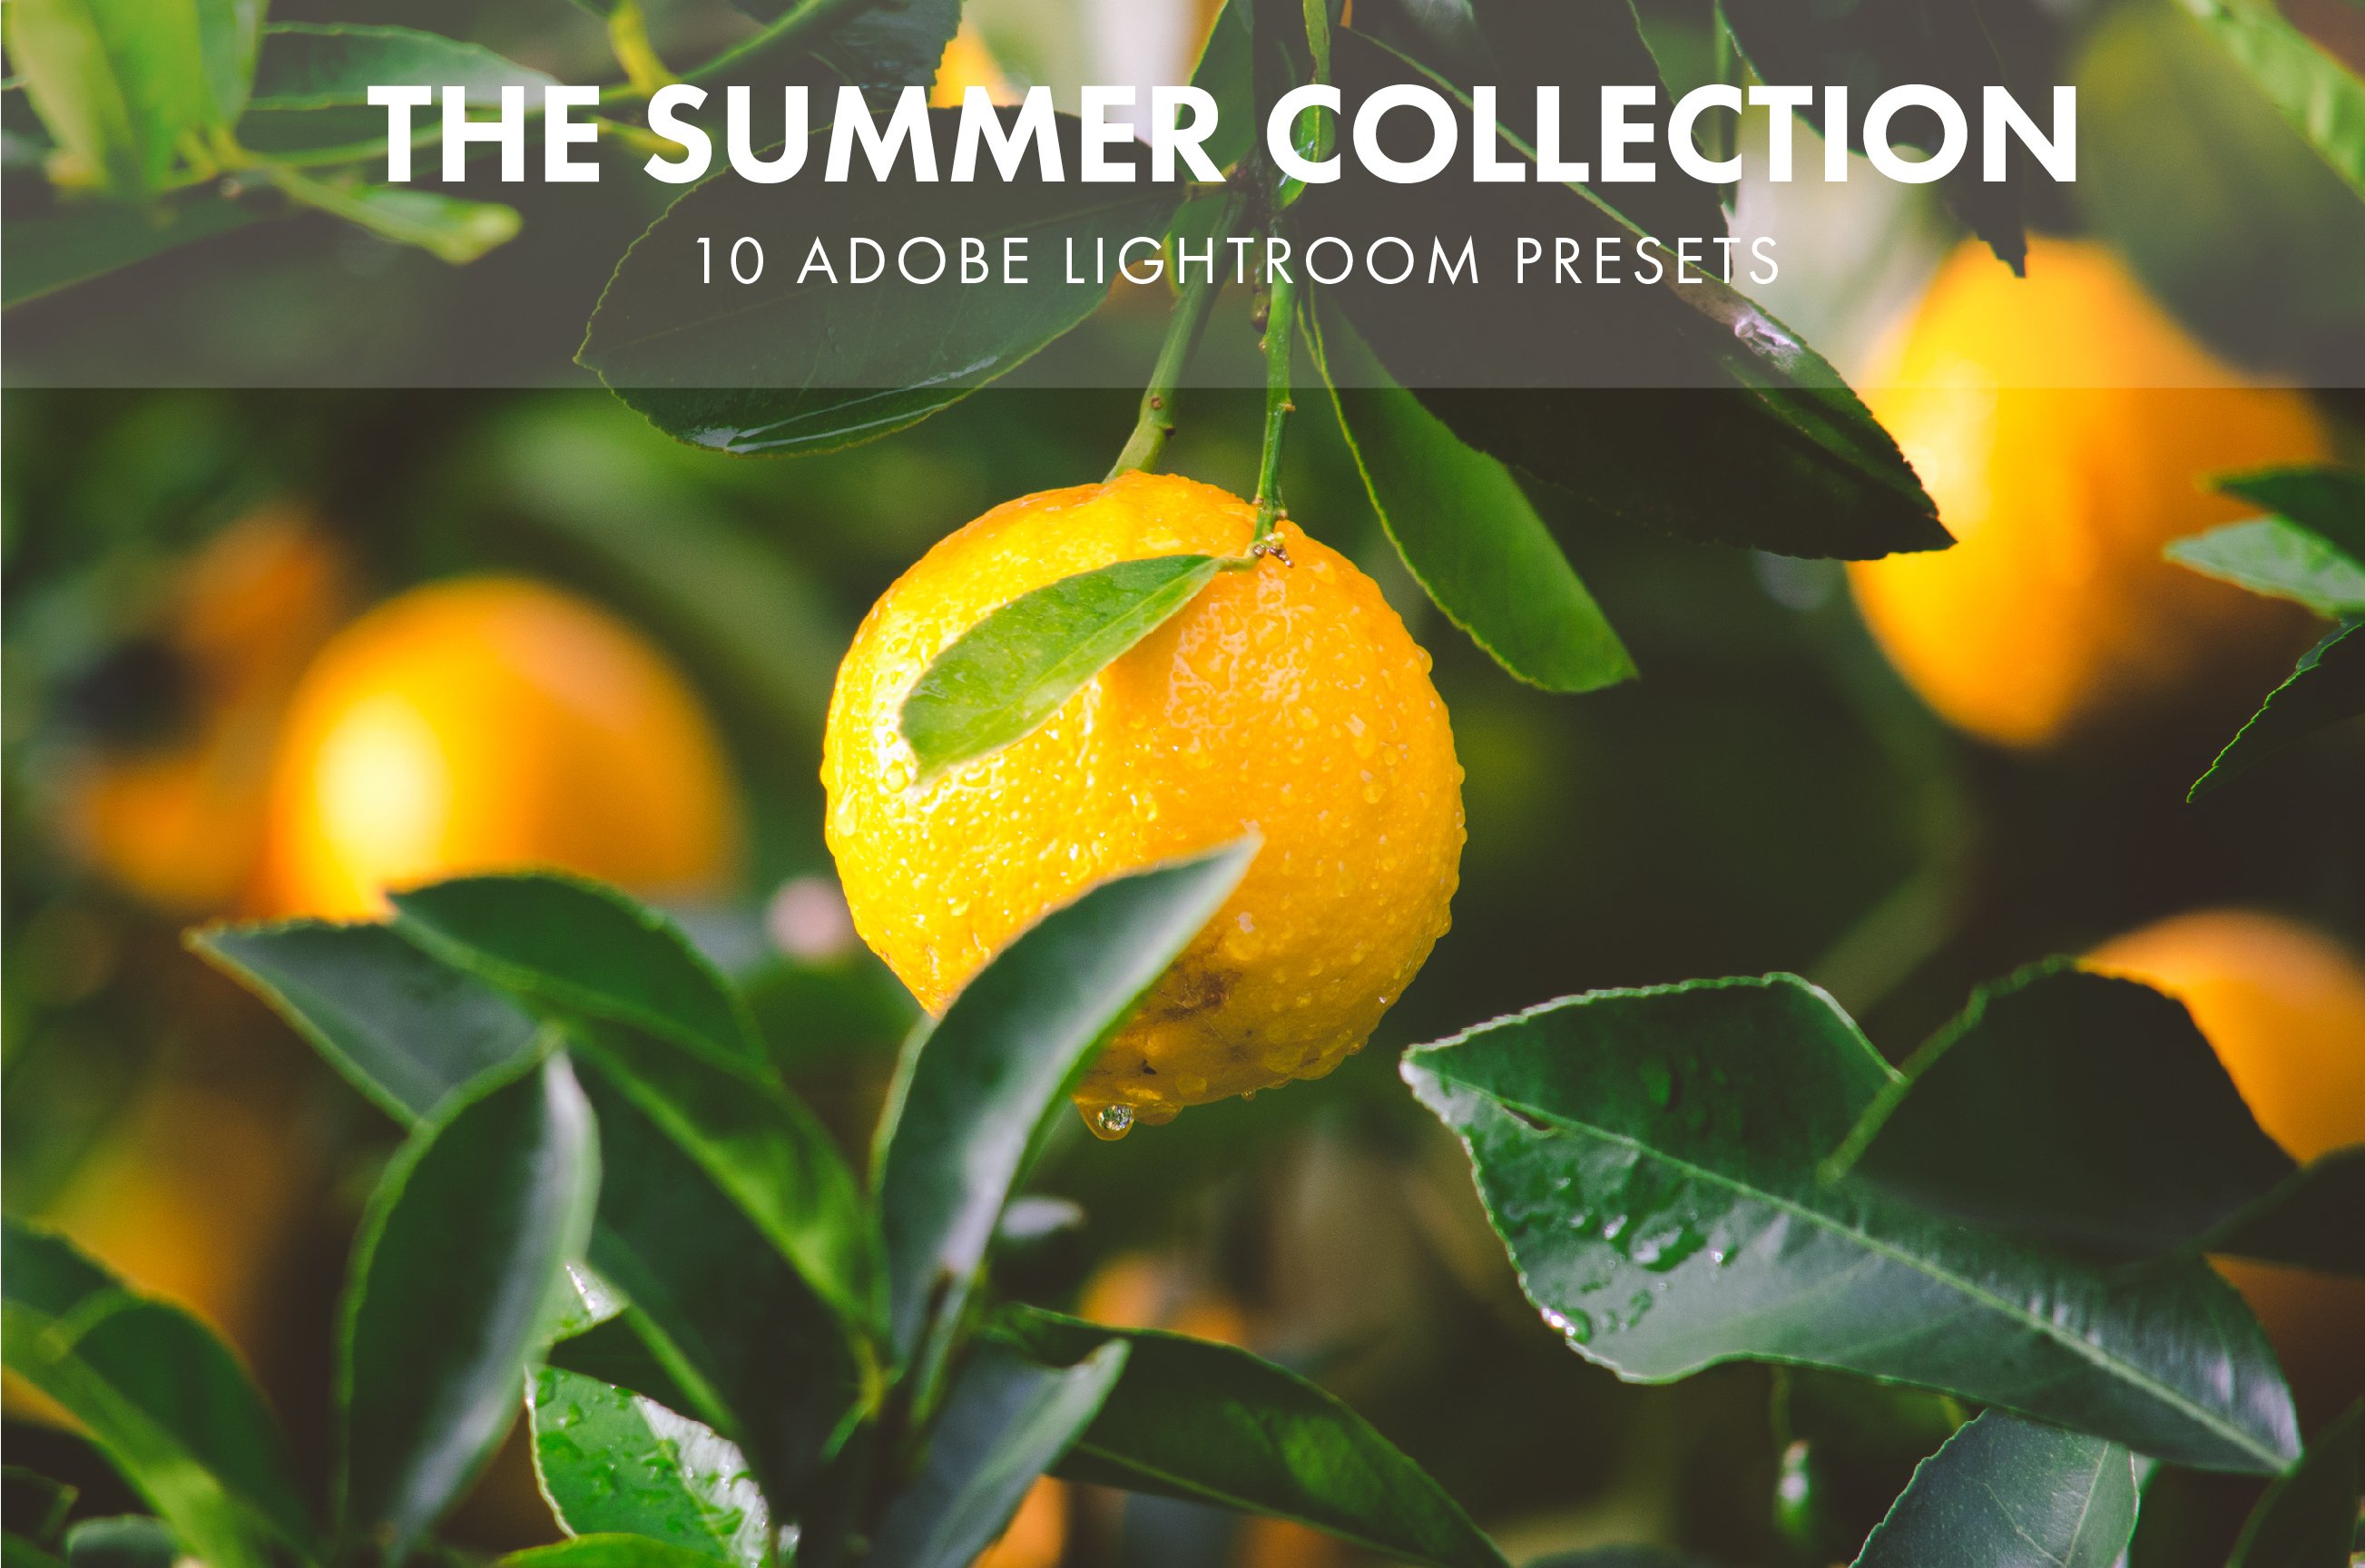 Adobe Lightroom Presets Summercover image.